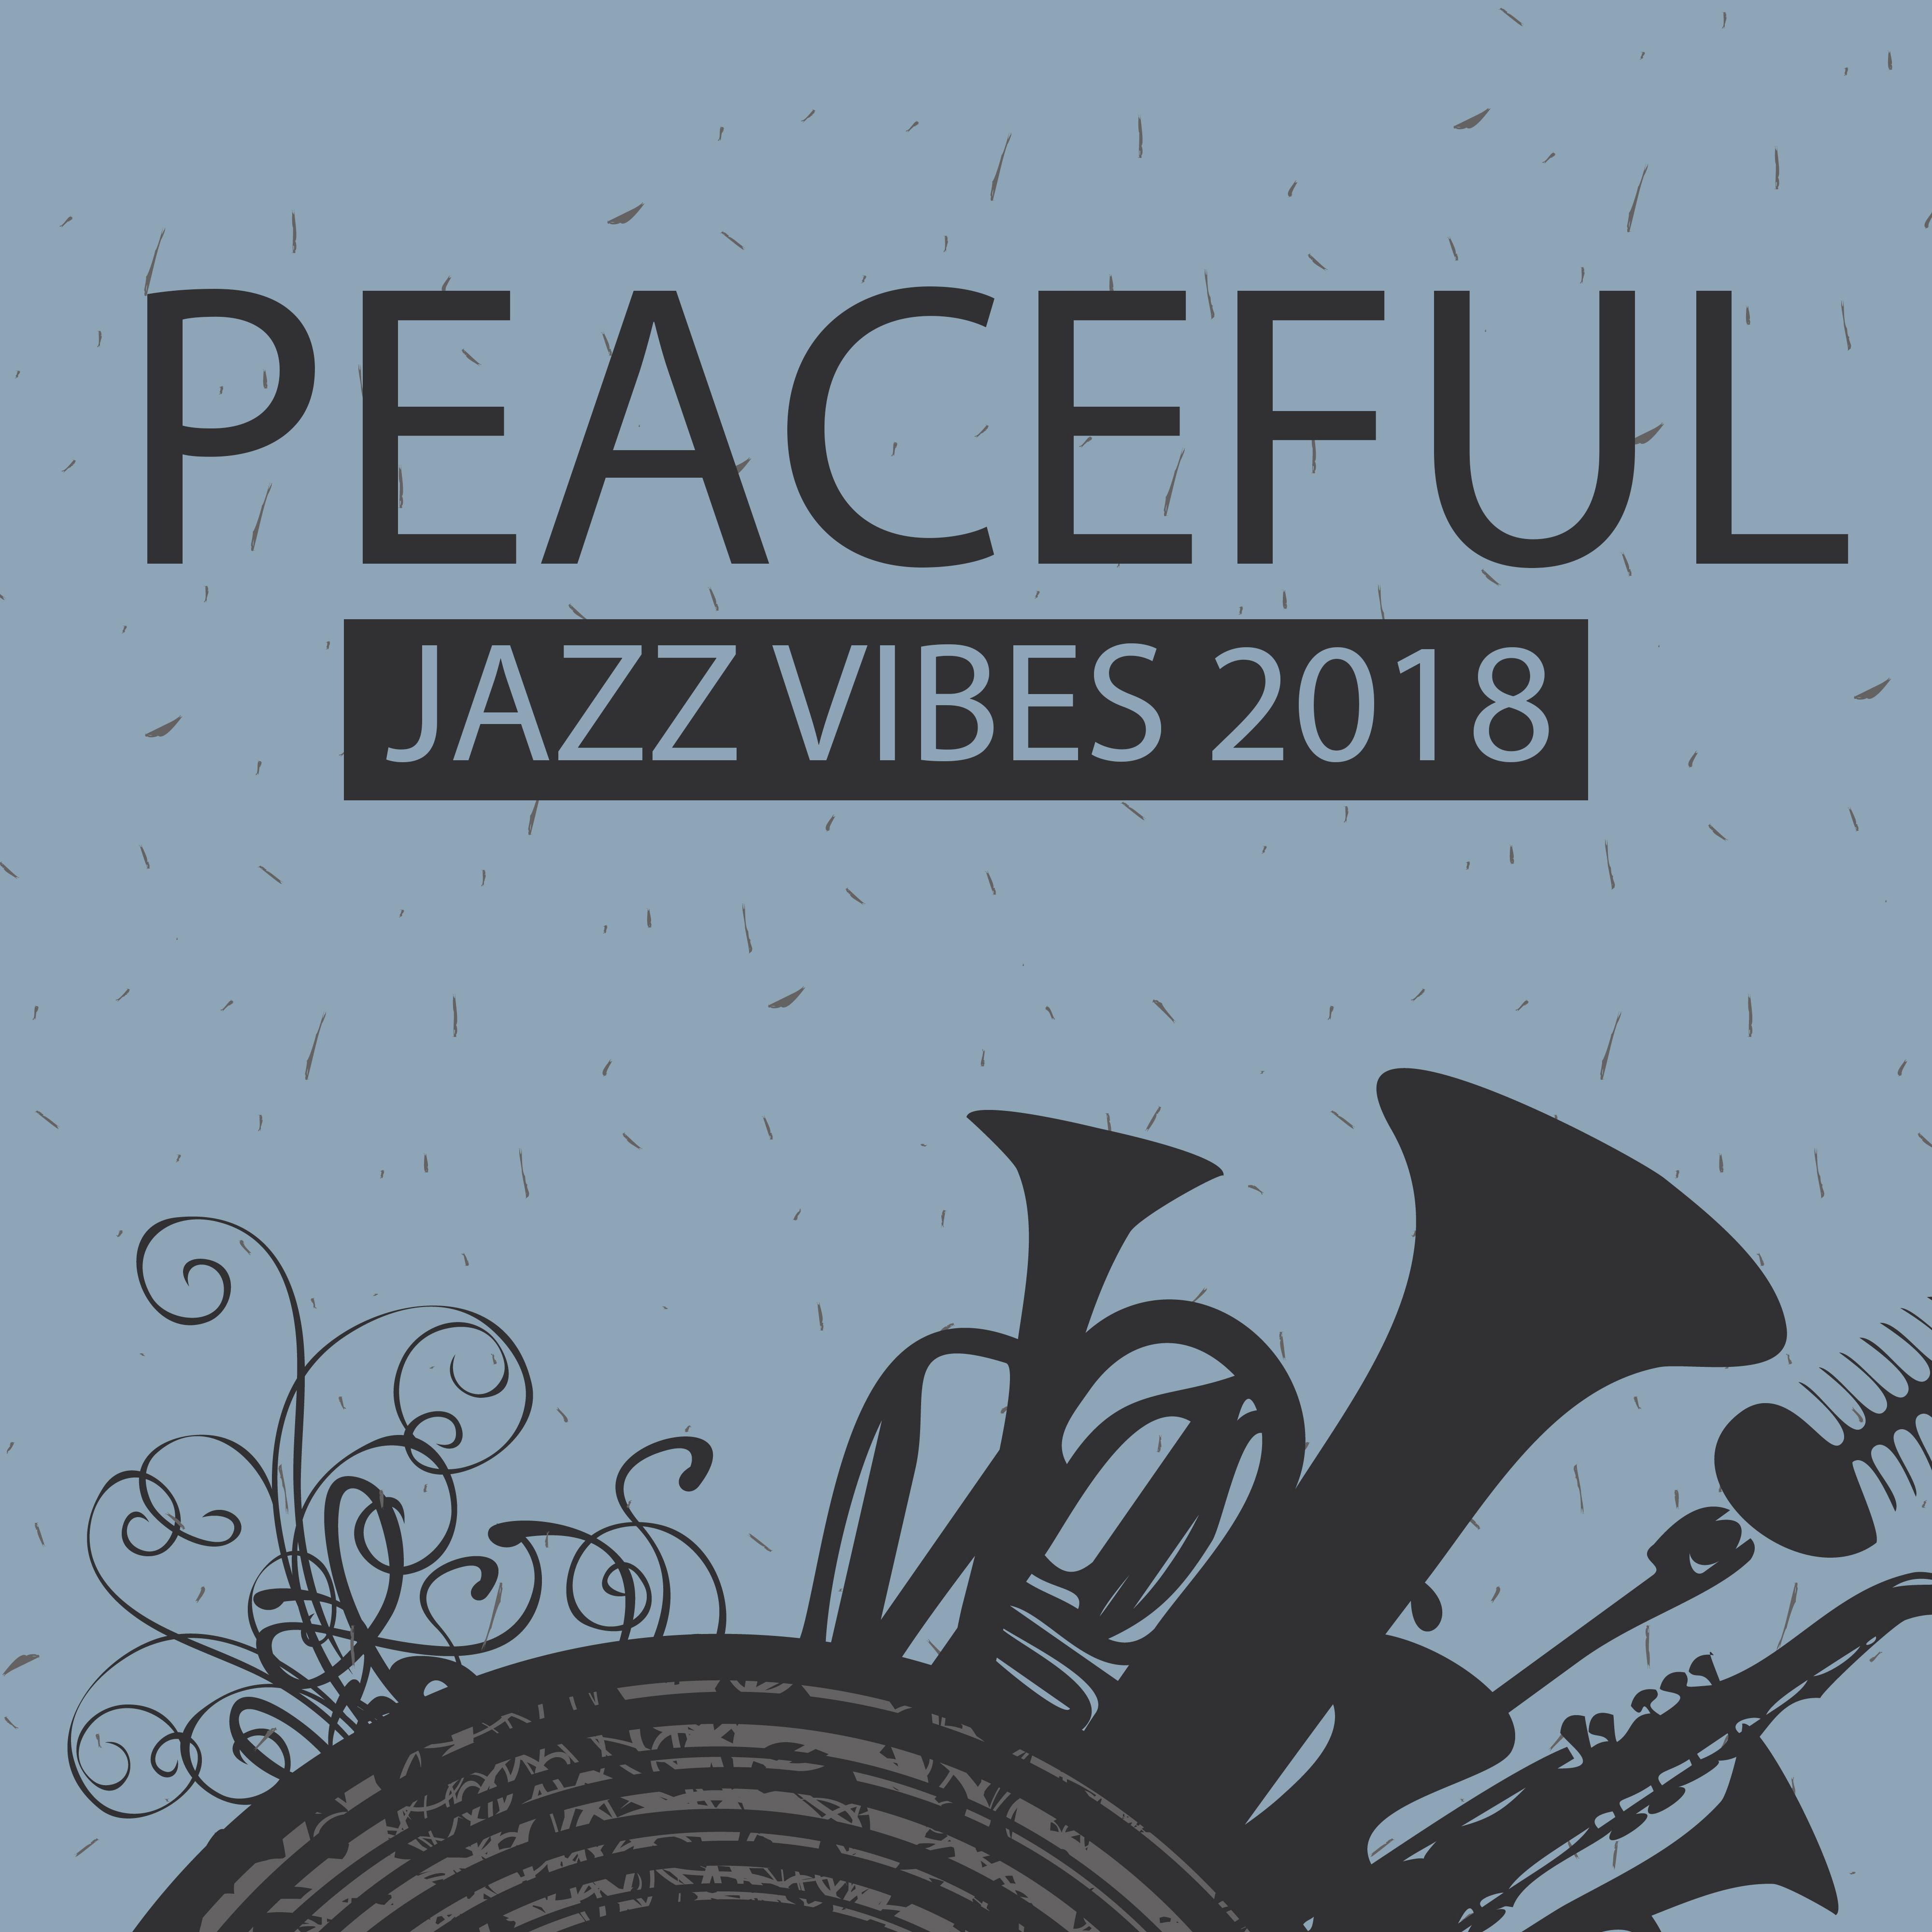 Peaceful Jazz Vibes 2018